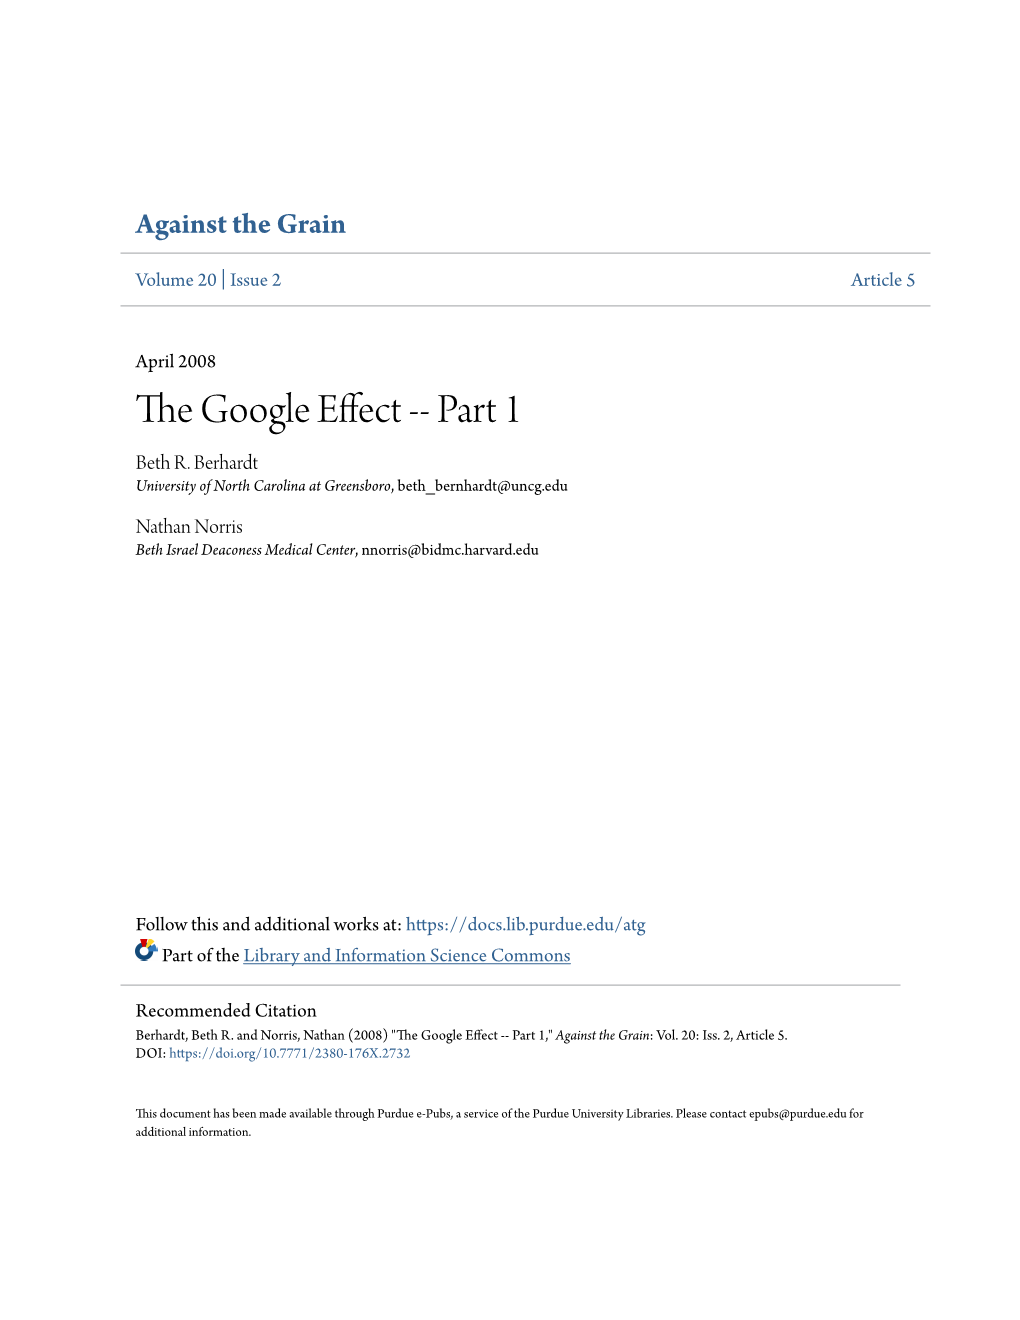 The Google Effect -- Part 1 Beth R